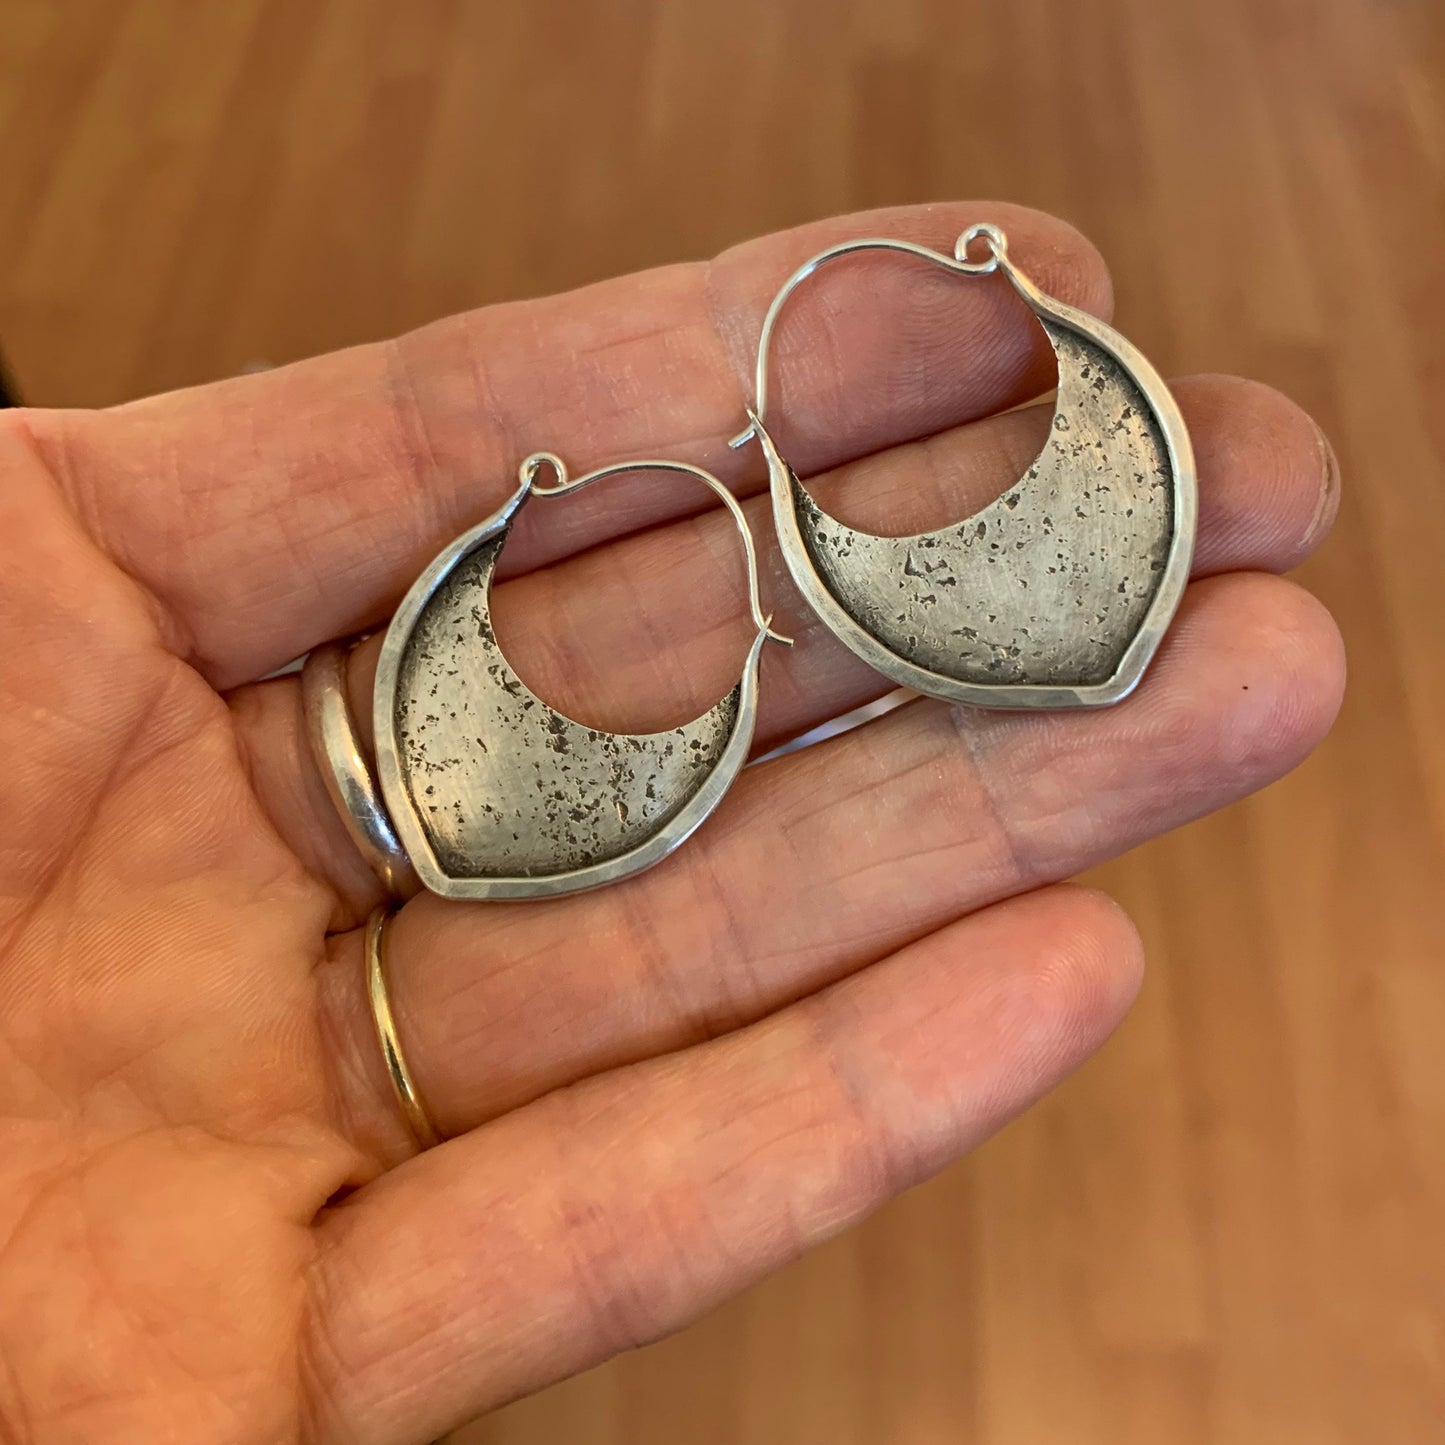 Silver earrings in tribal design- sterling jewelry for women - yoga jewelry - rustic silver hoops